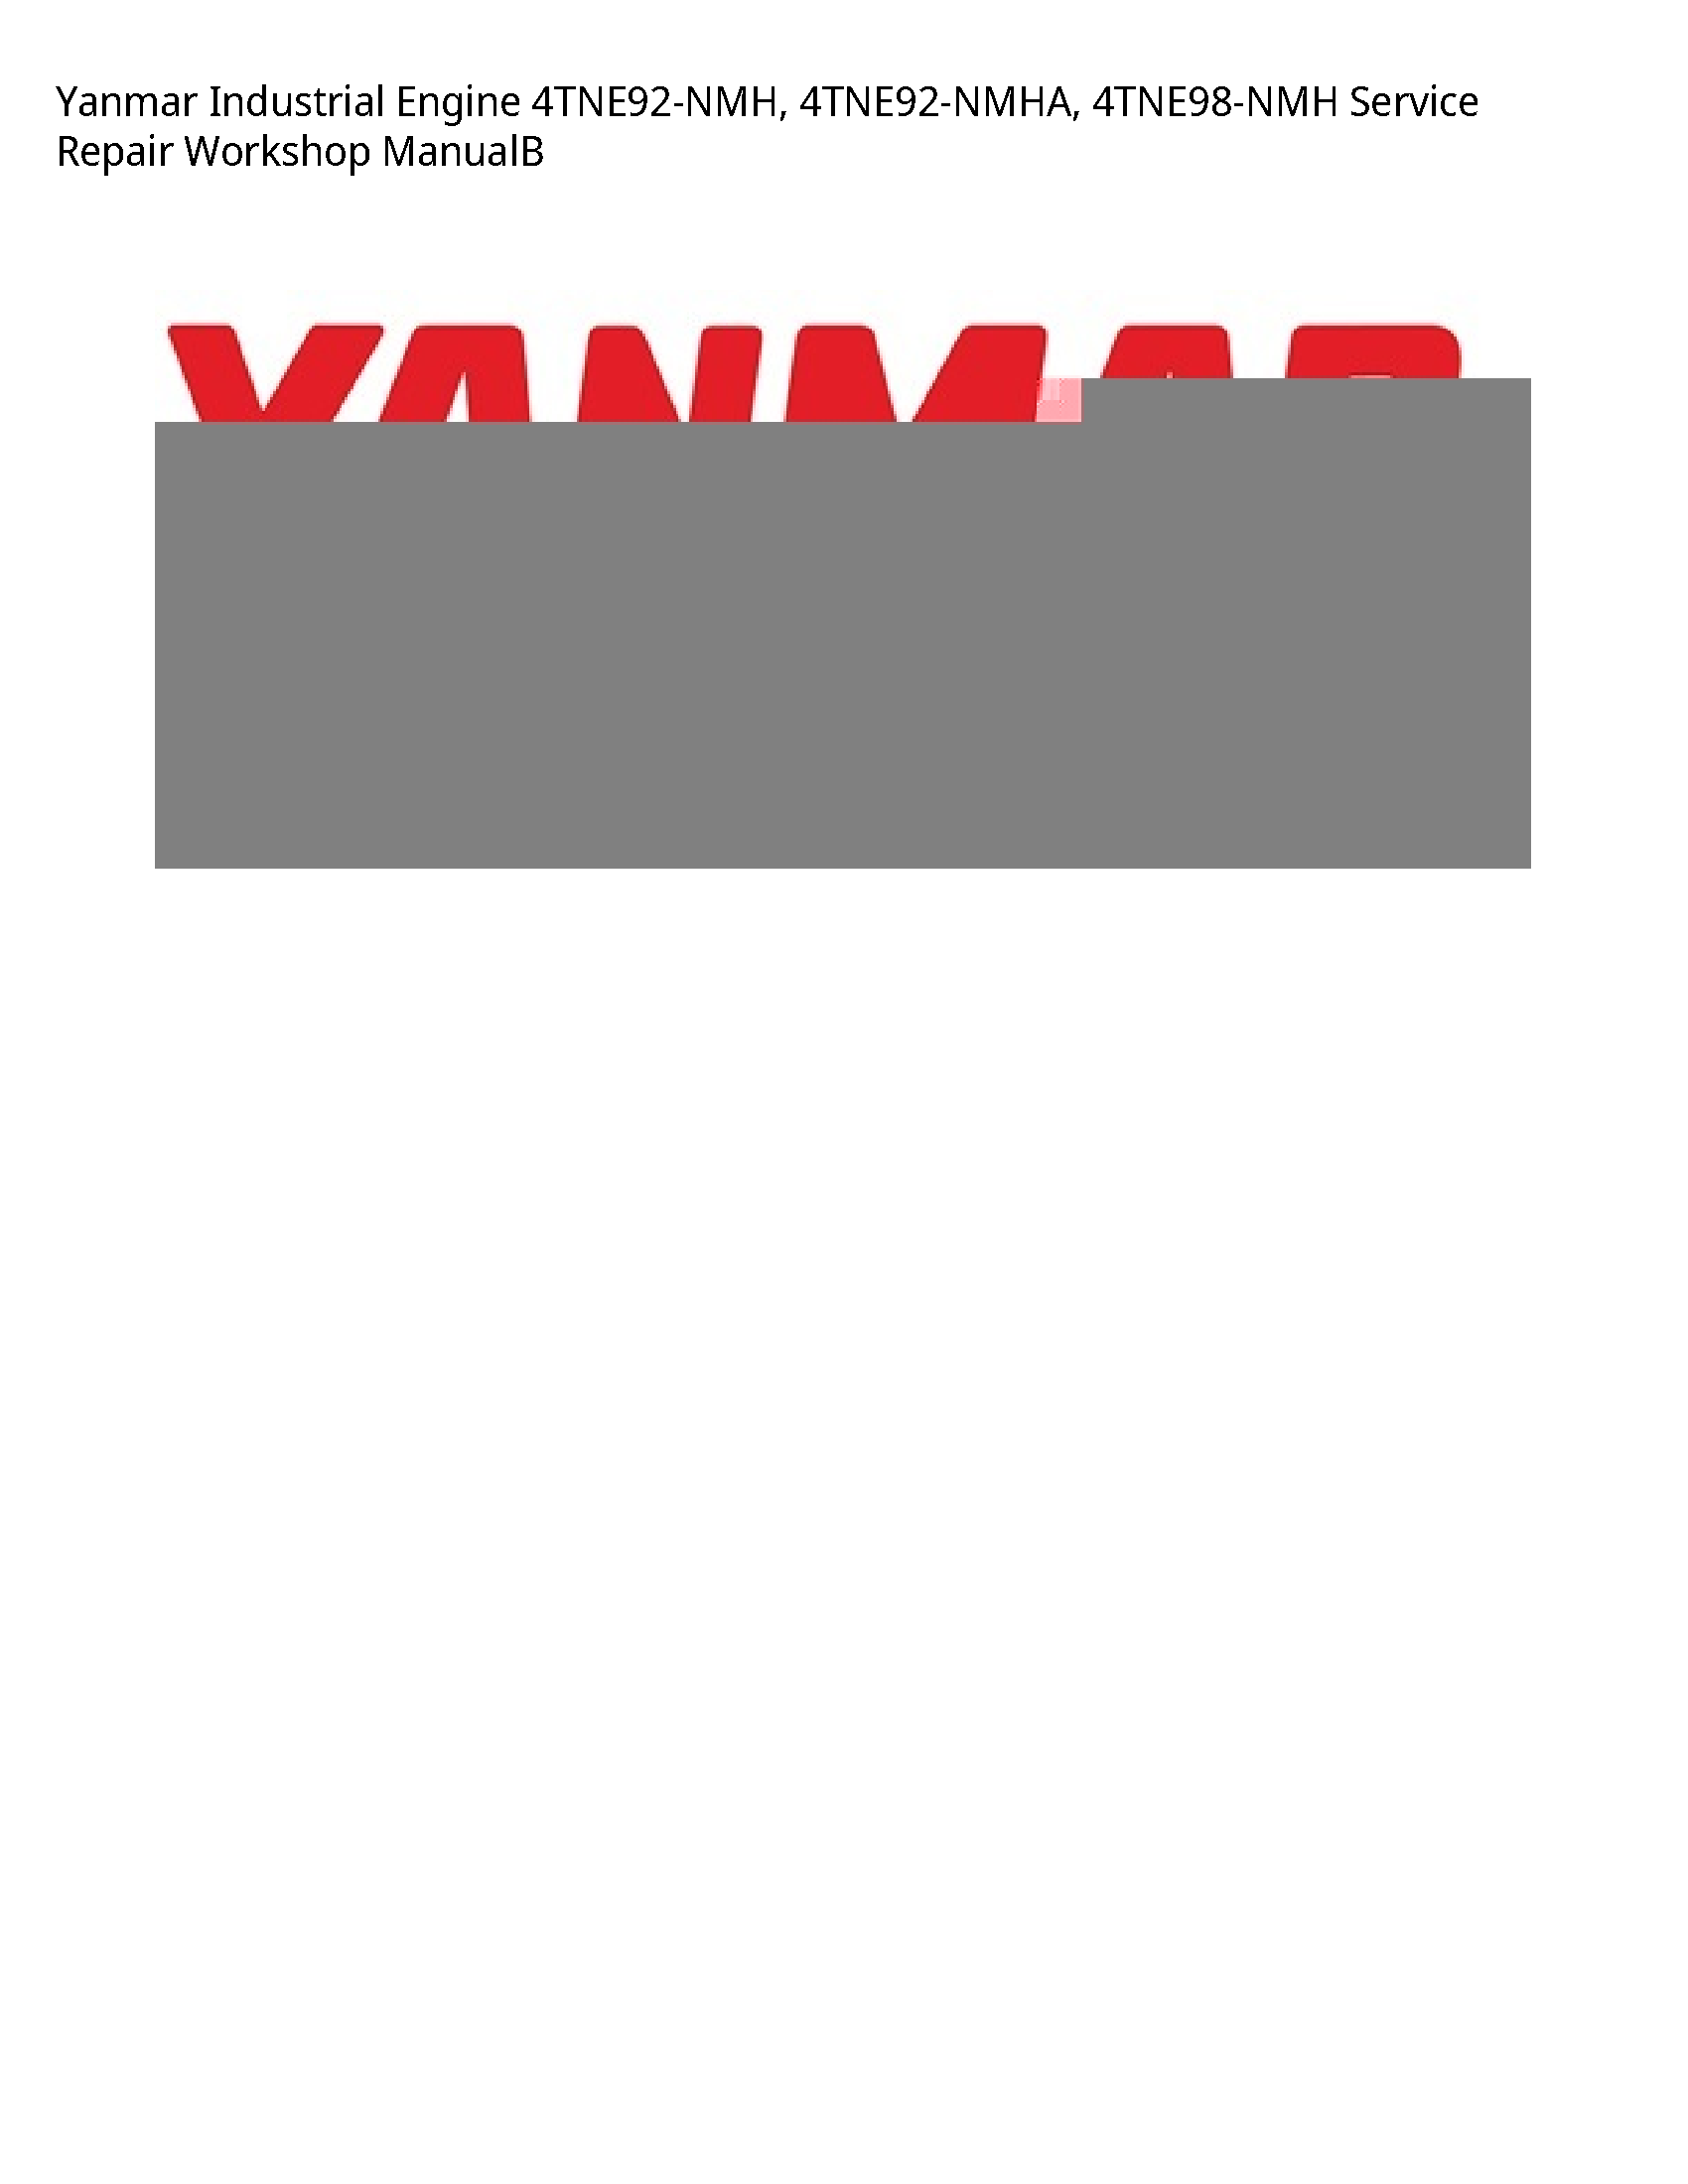 Yanmar 4TNE92-NMH Industrial Engine manual